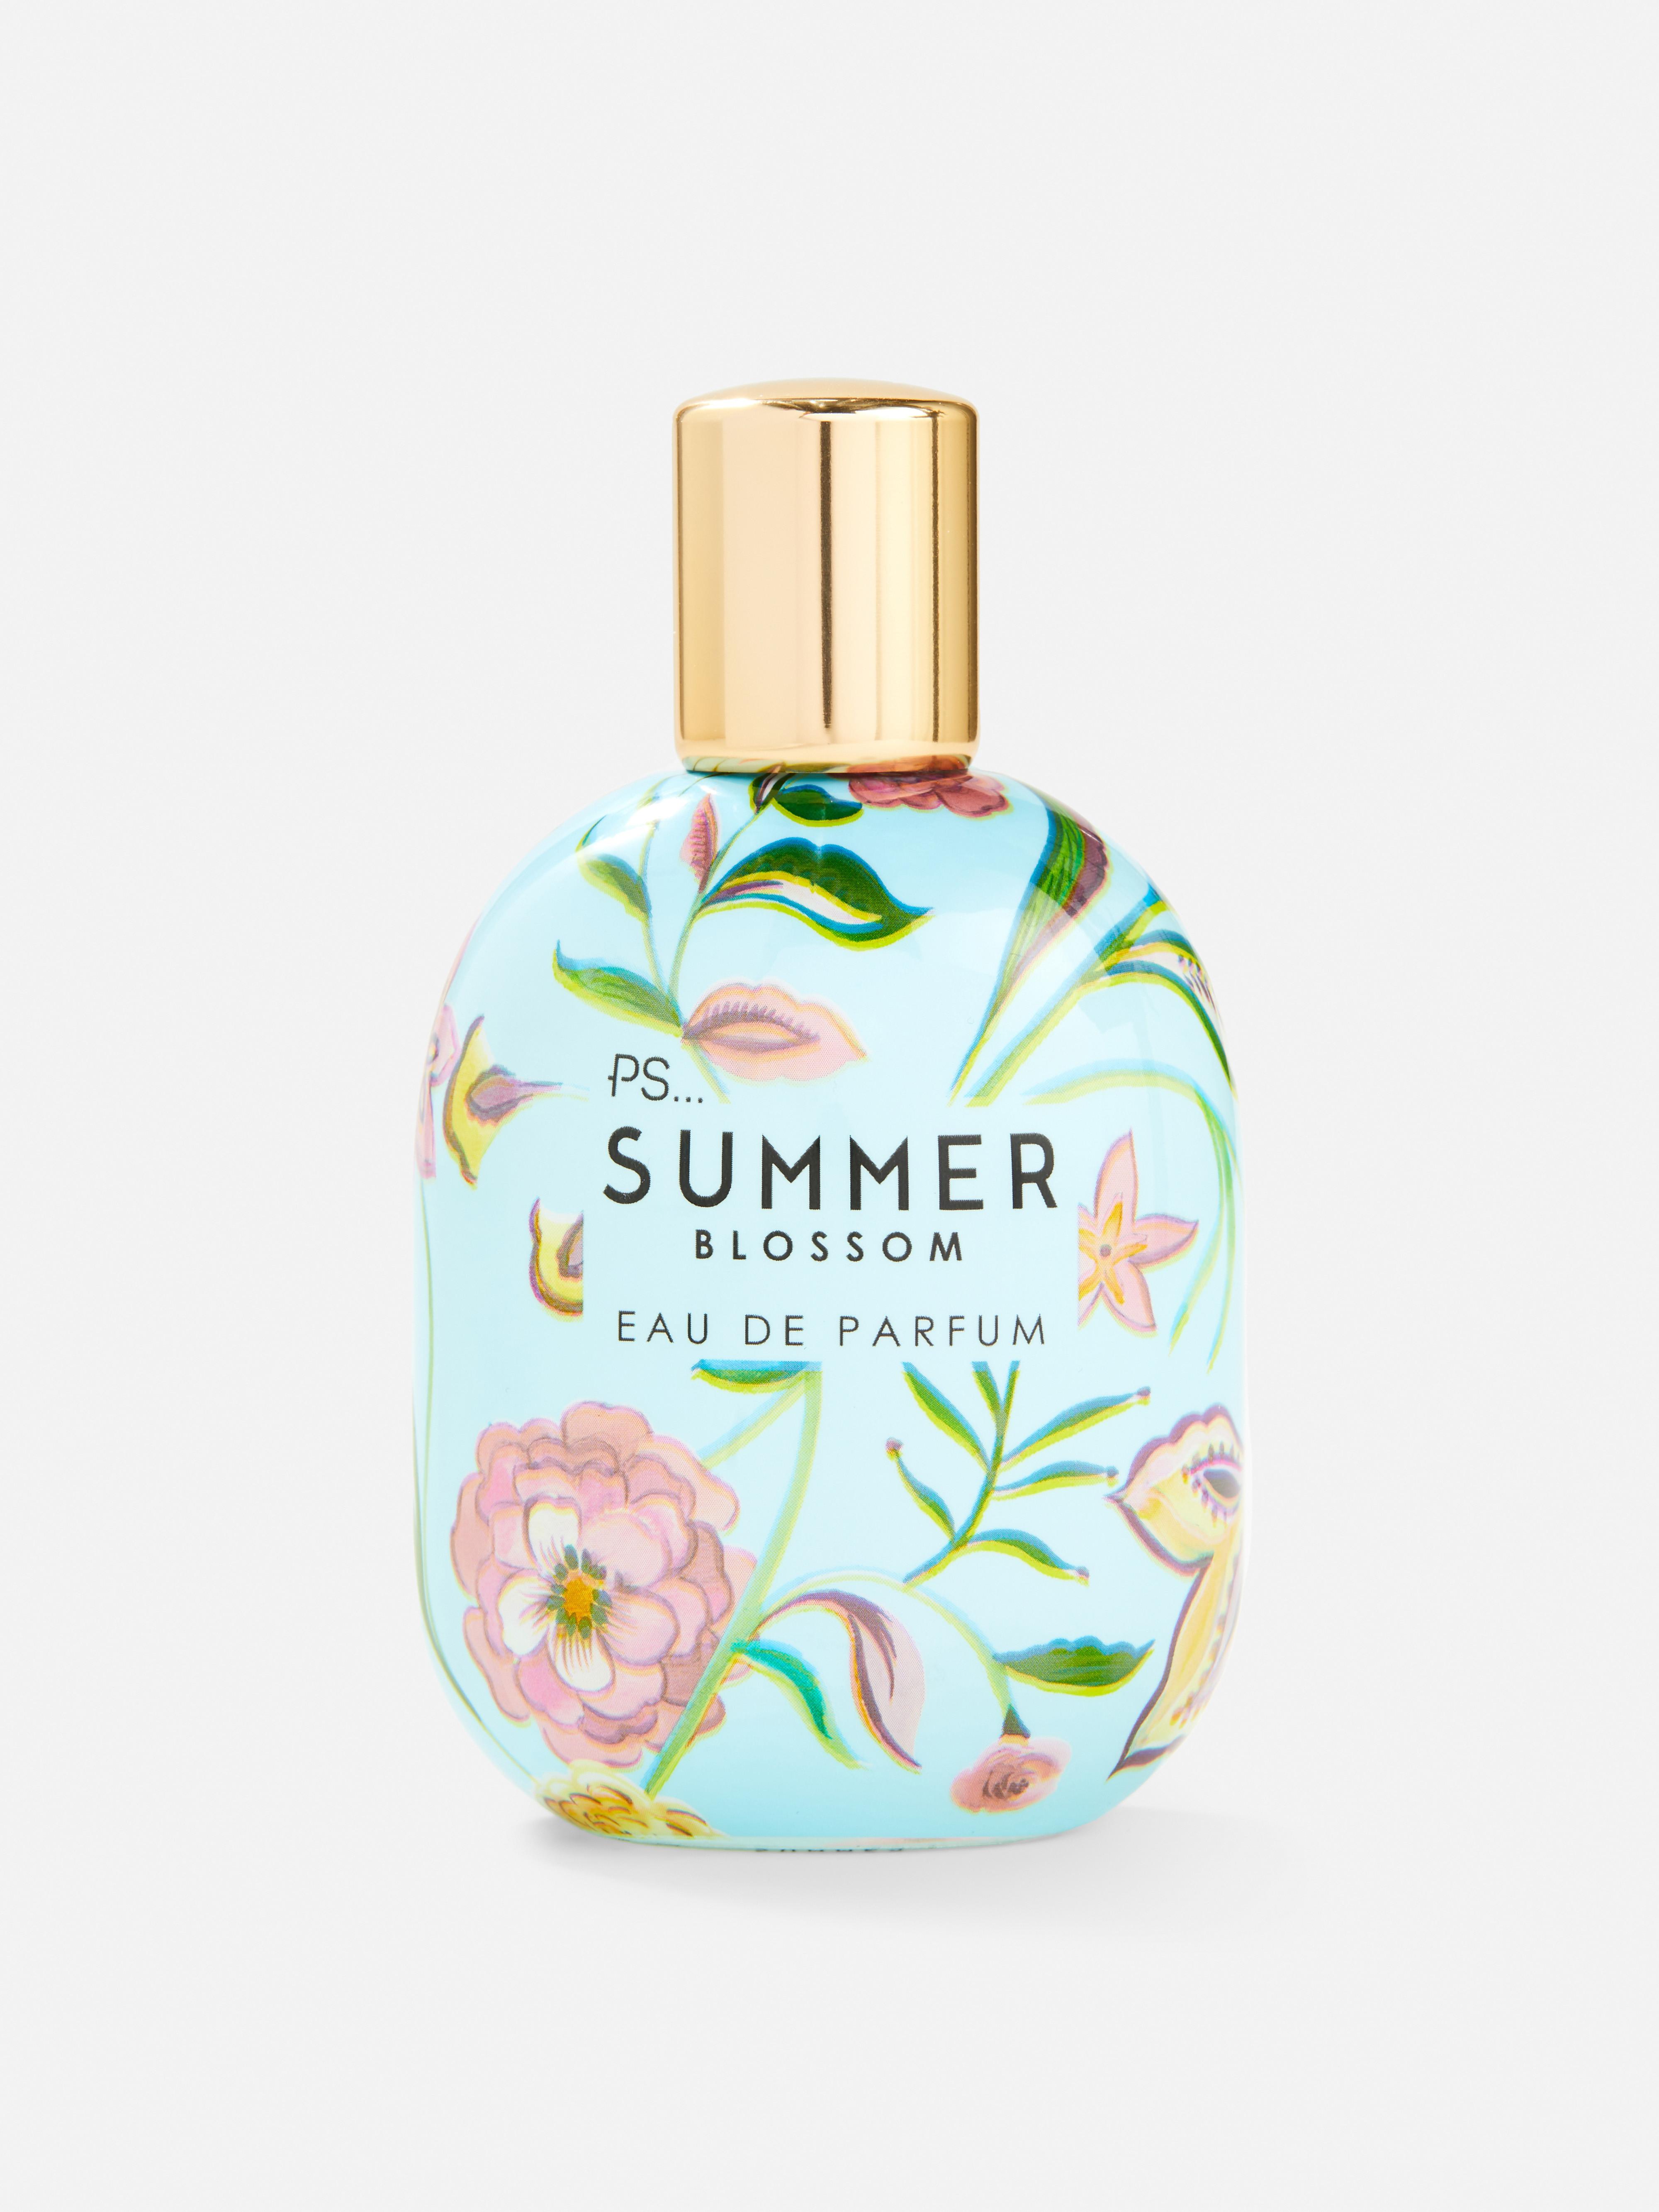 PS... Summer Blossom Eau de Parfum